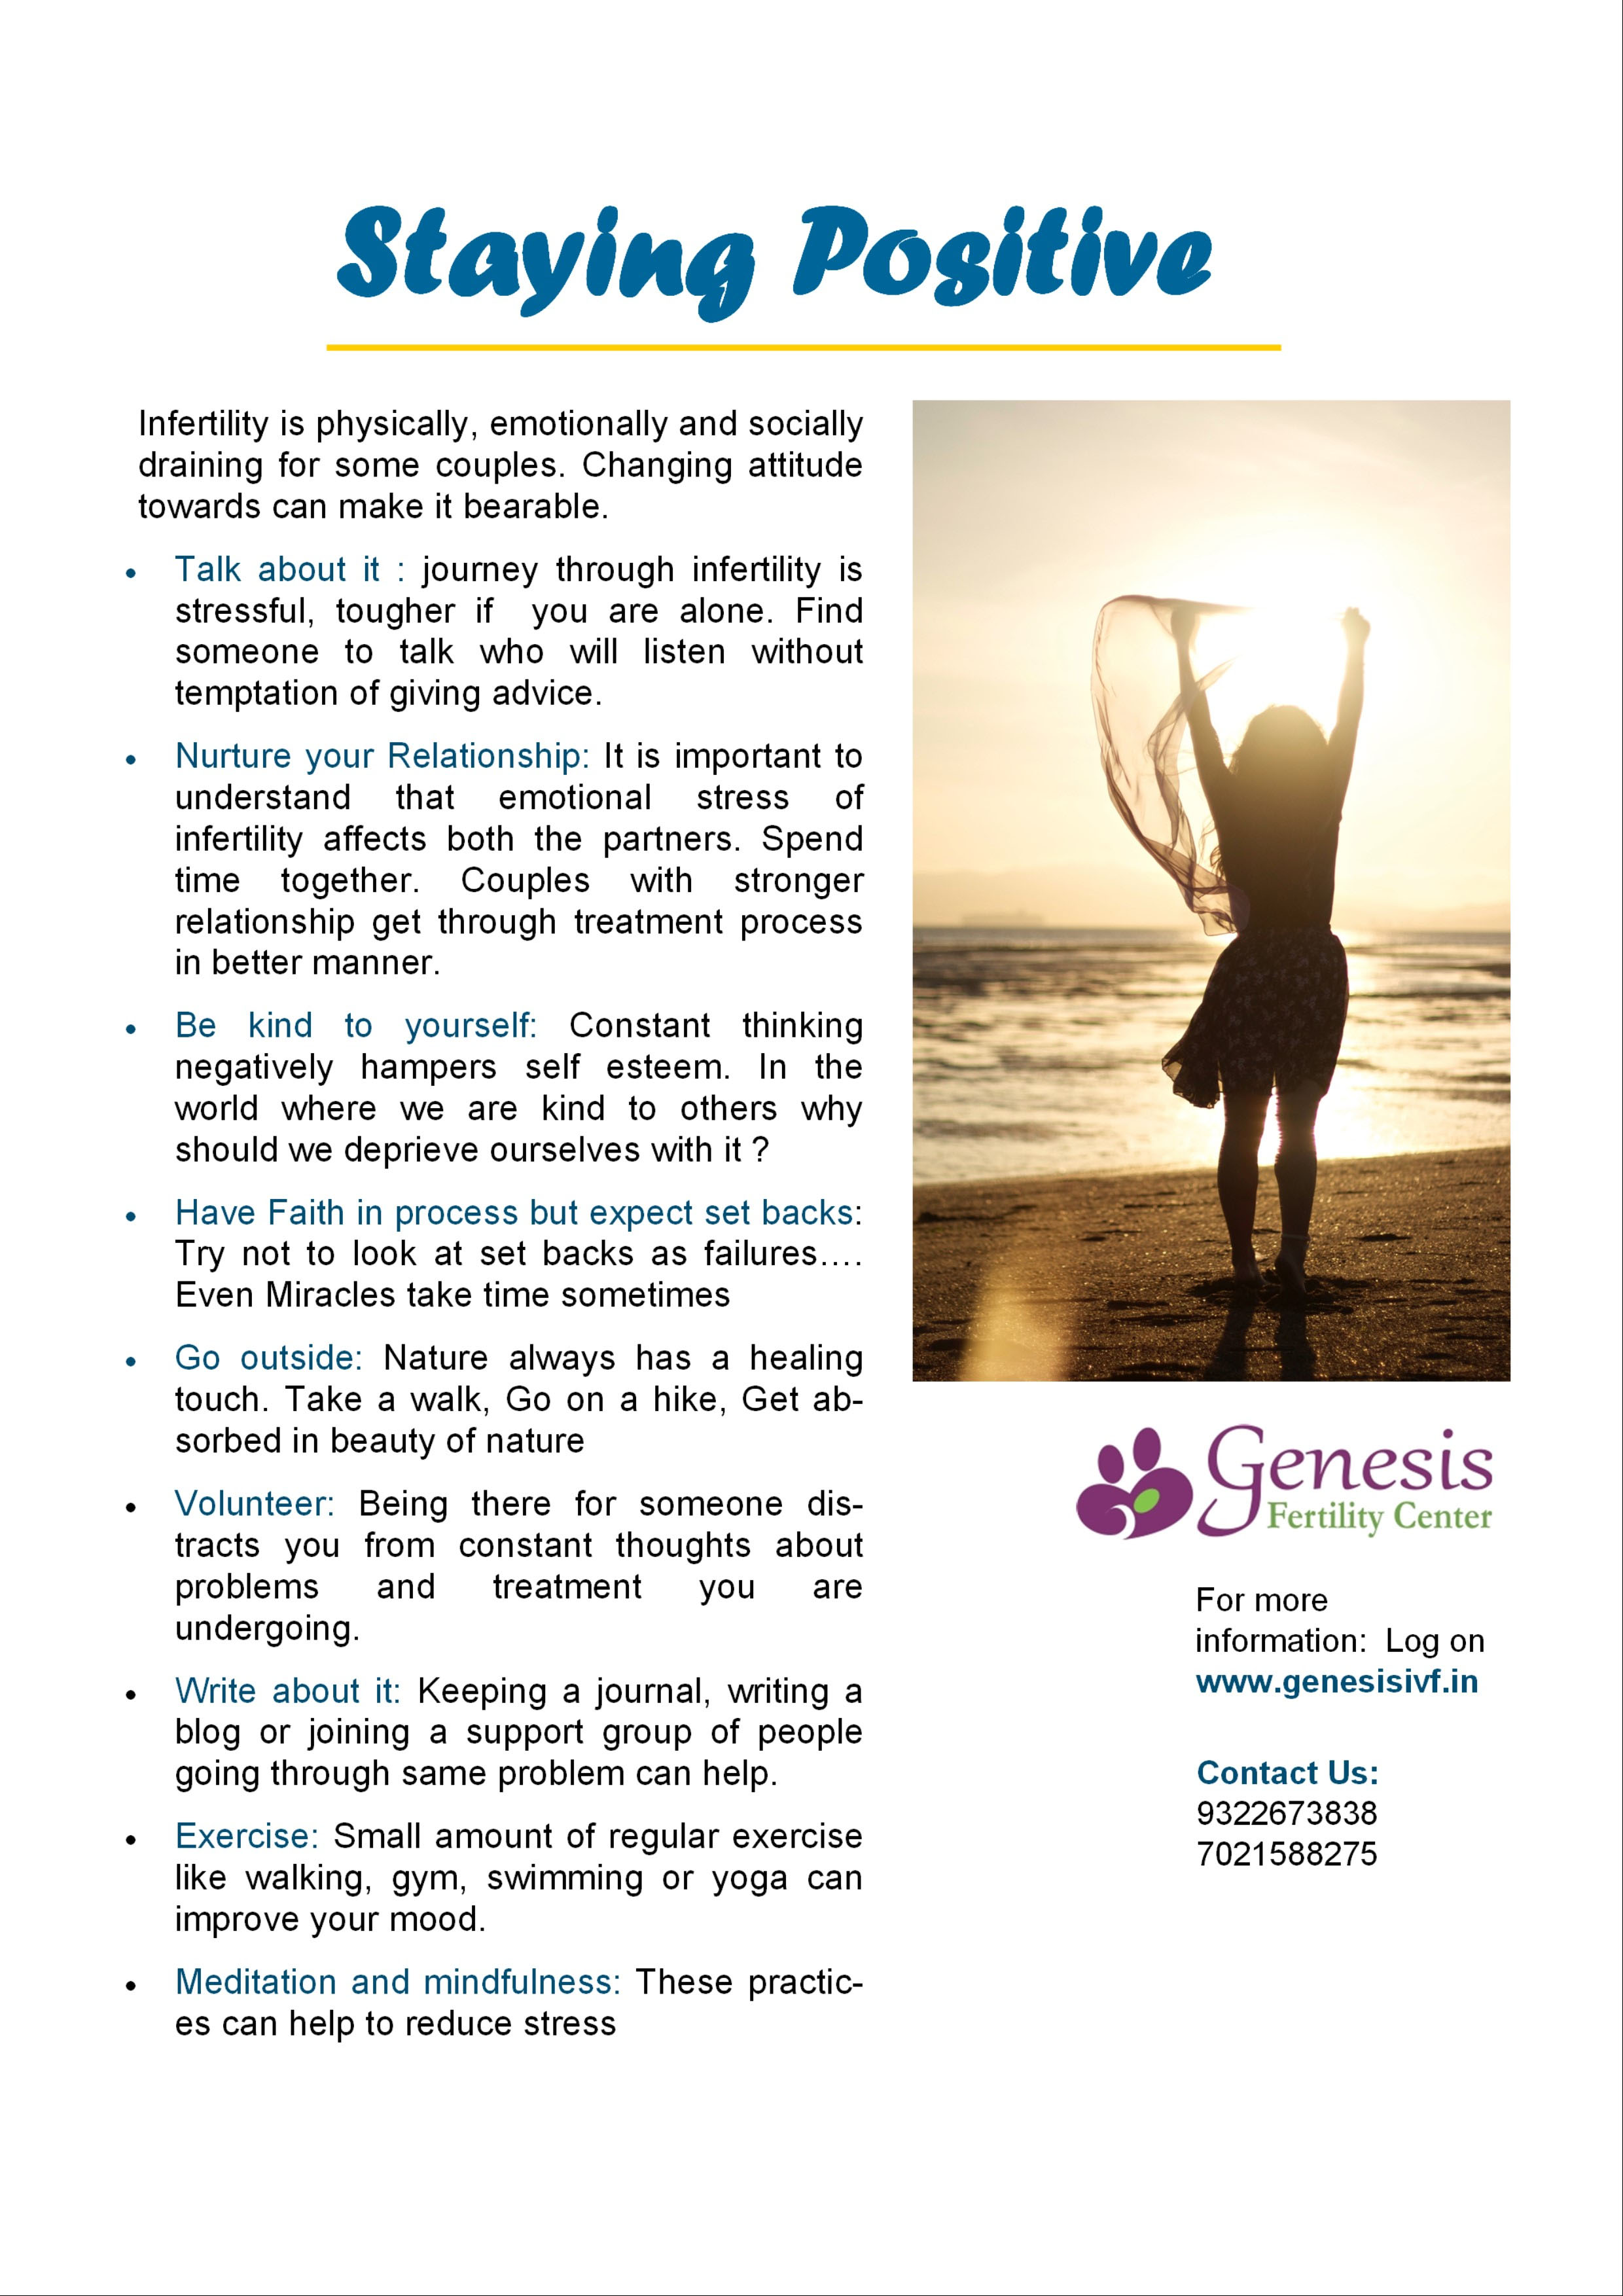 Stay positive blog by Genesis Fertility Center